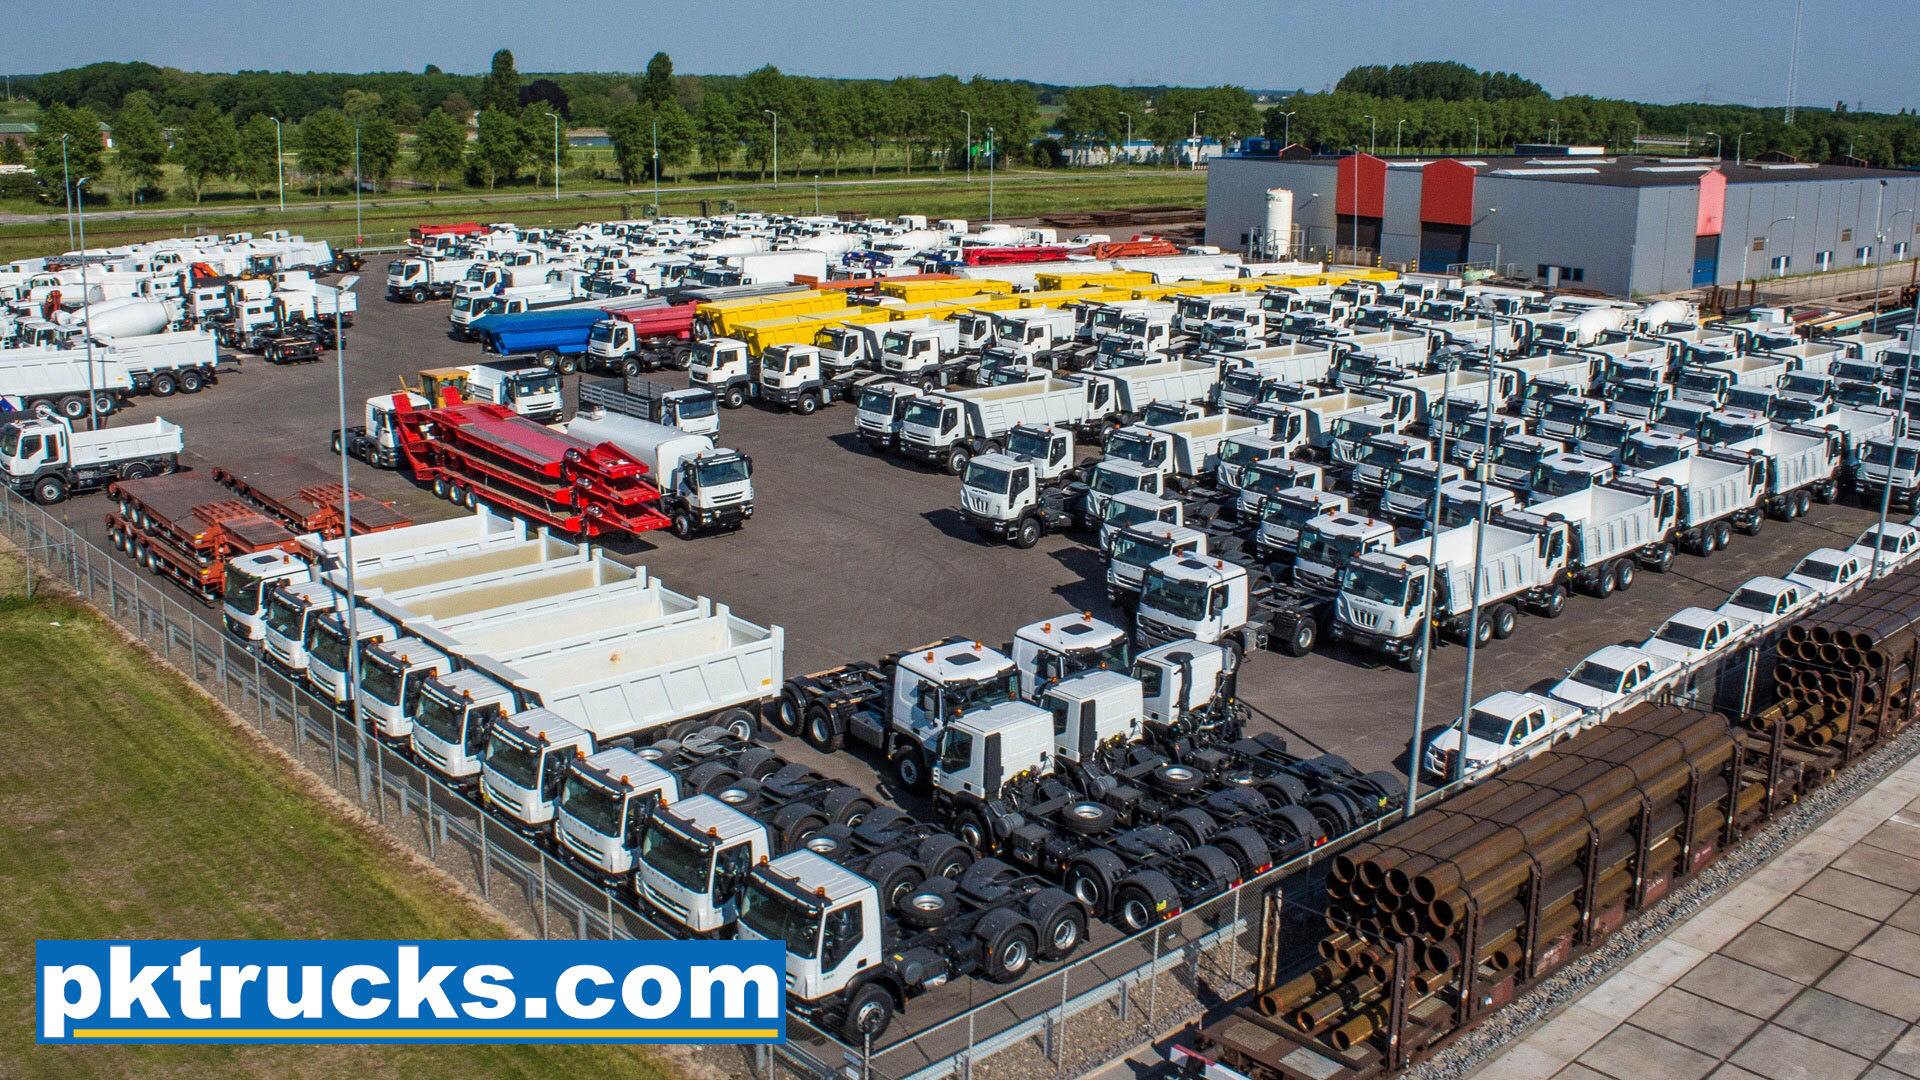 Pk trucks holland undefined: صور 3